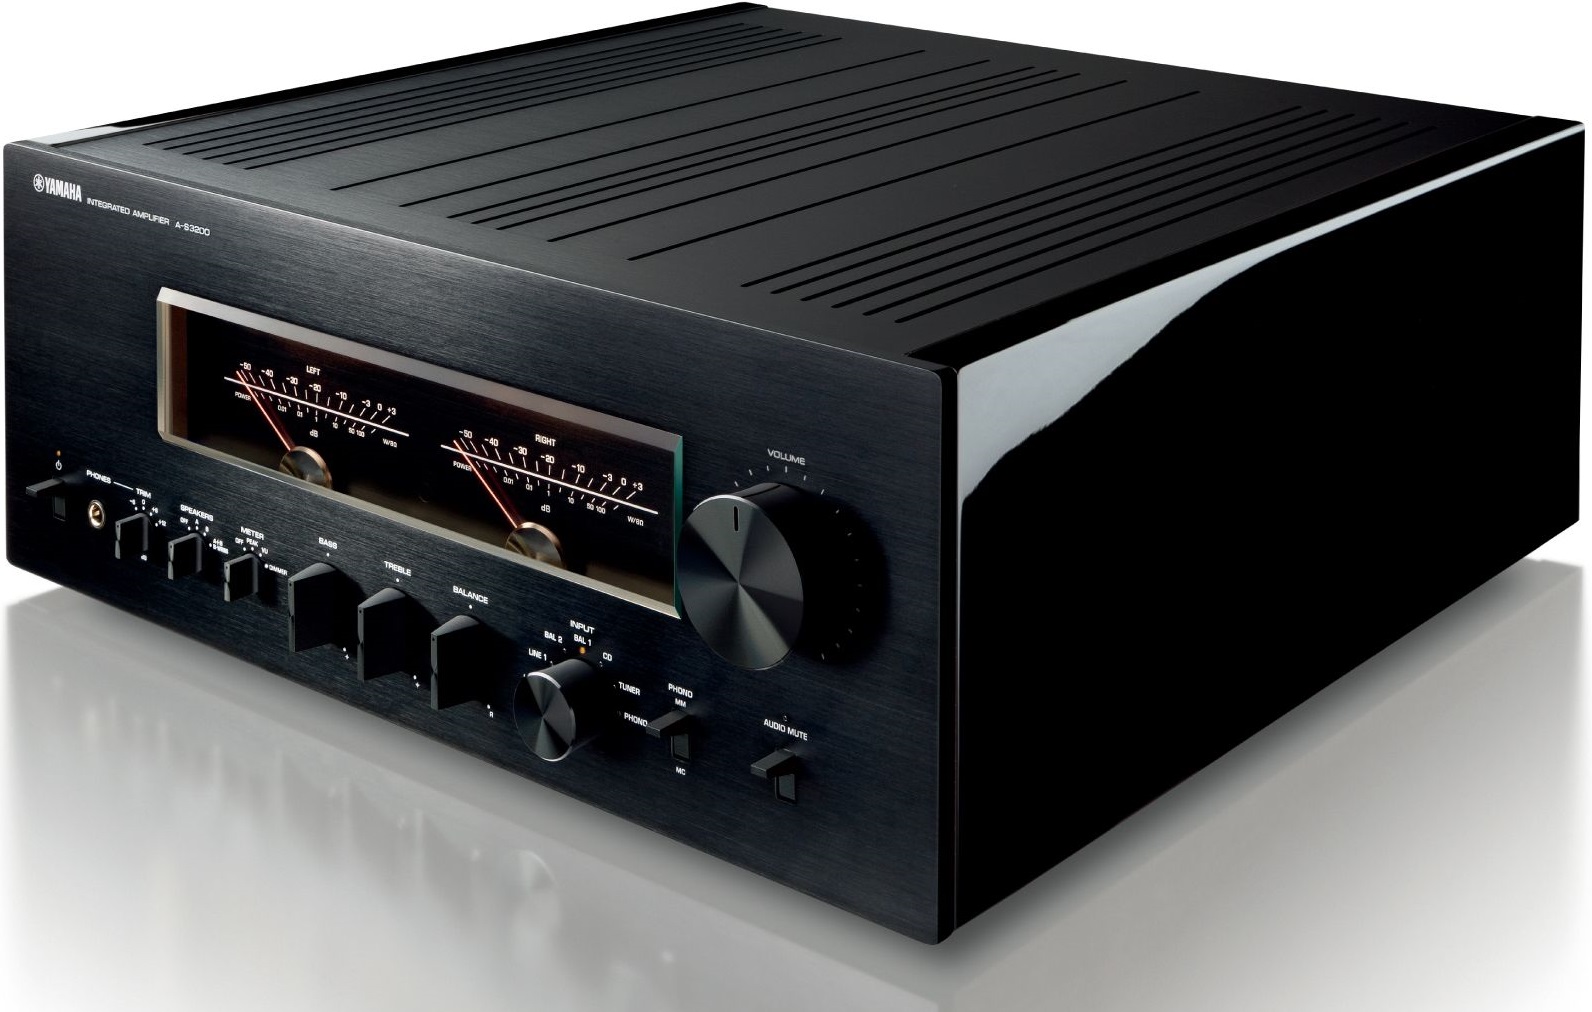 A-S3200 Integrated Amplifier - Yamaha USA